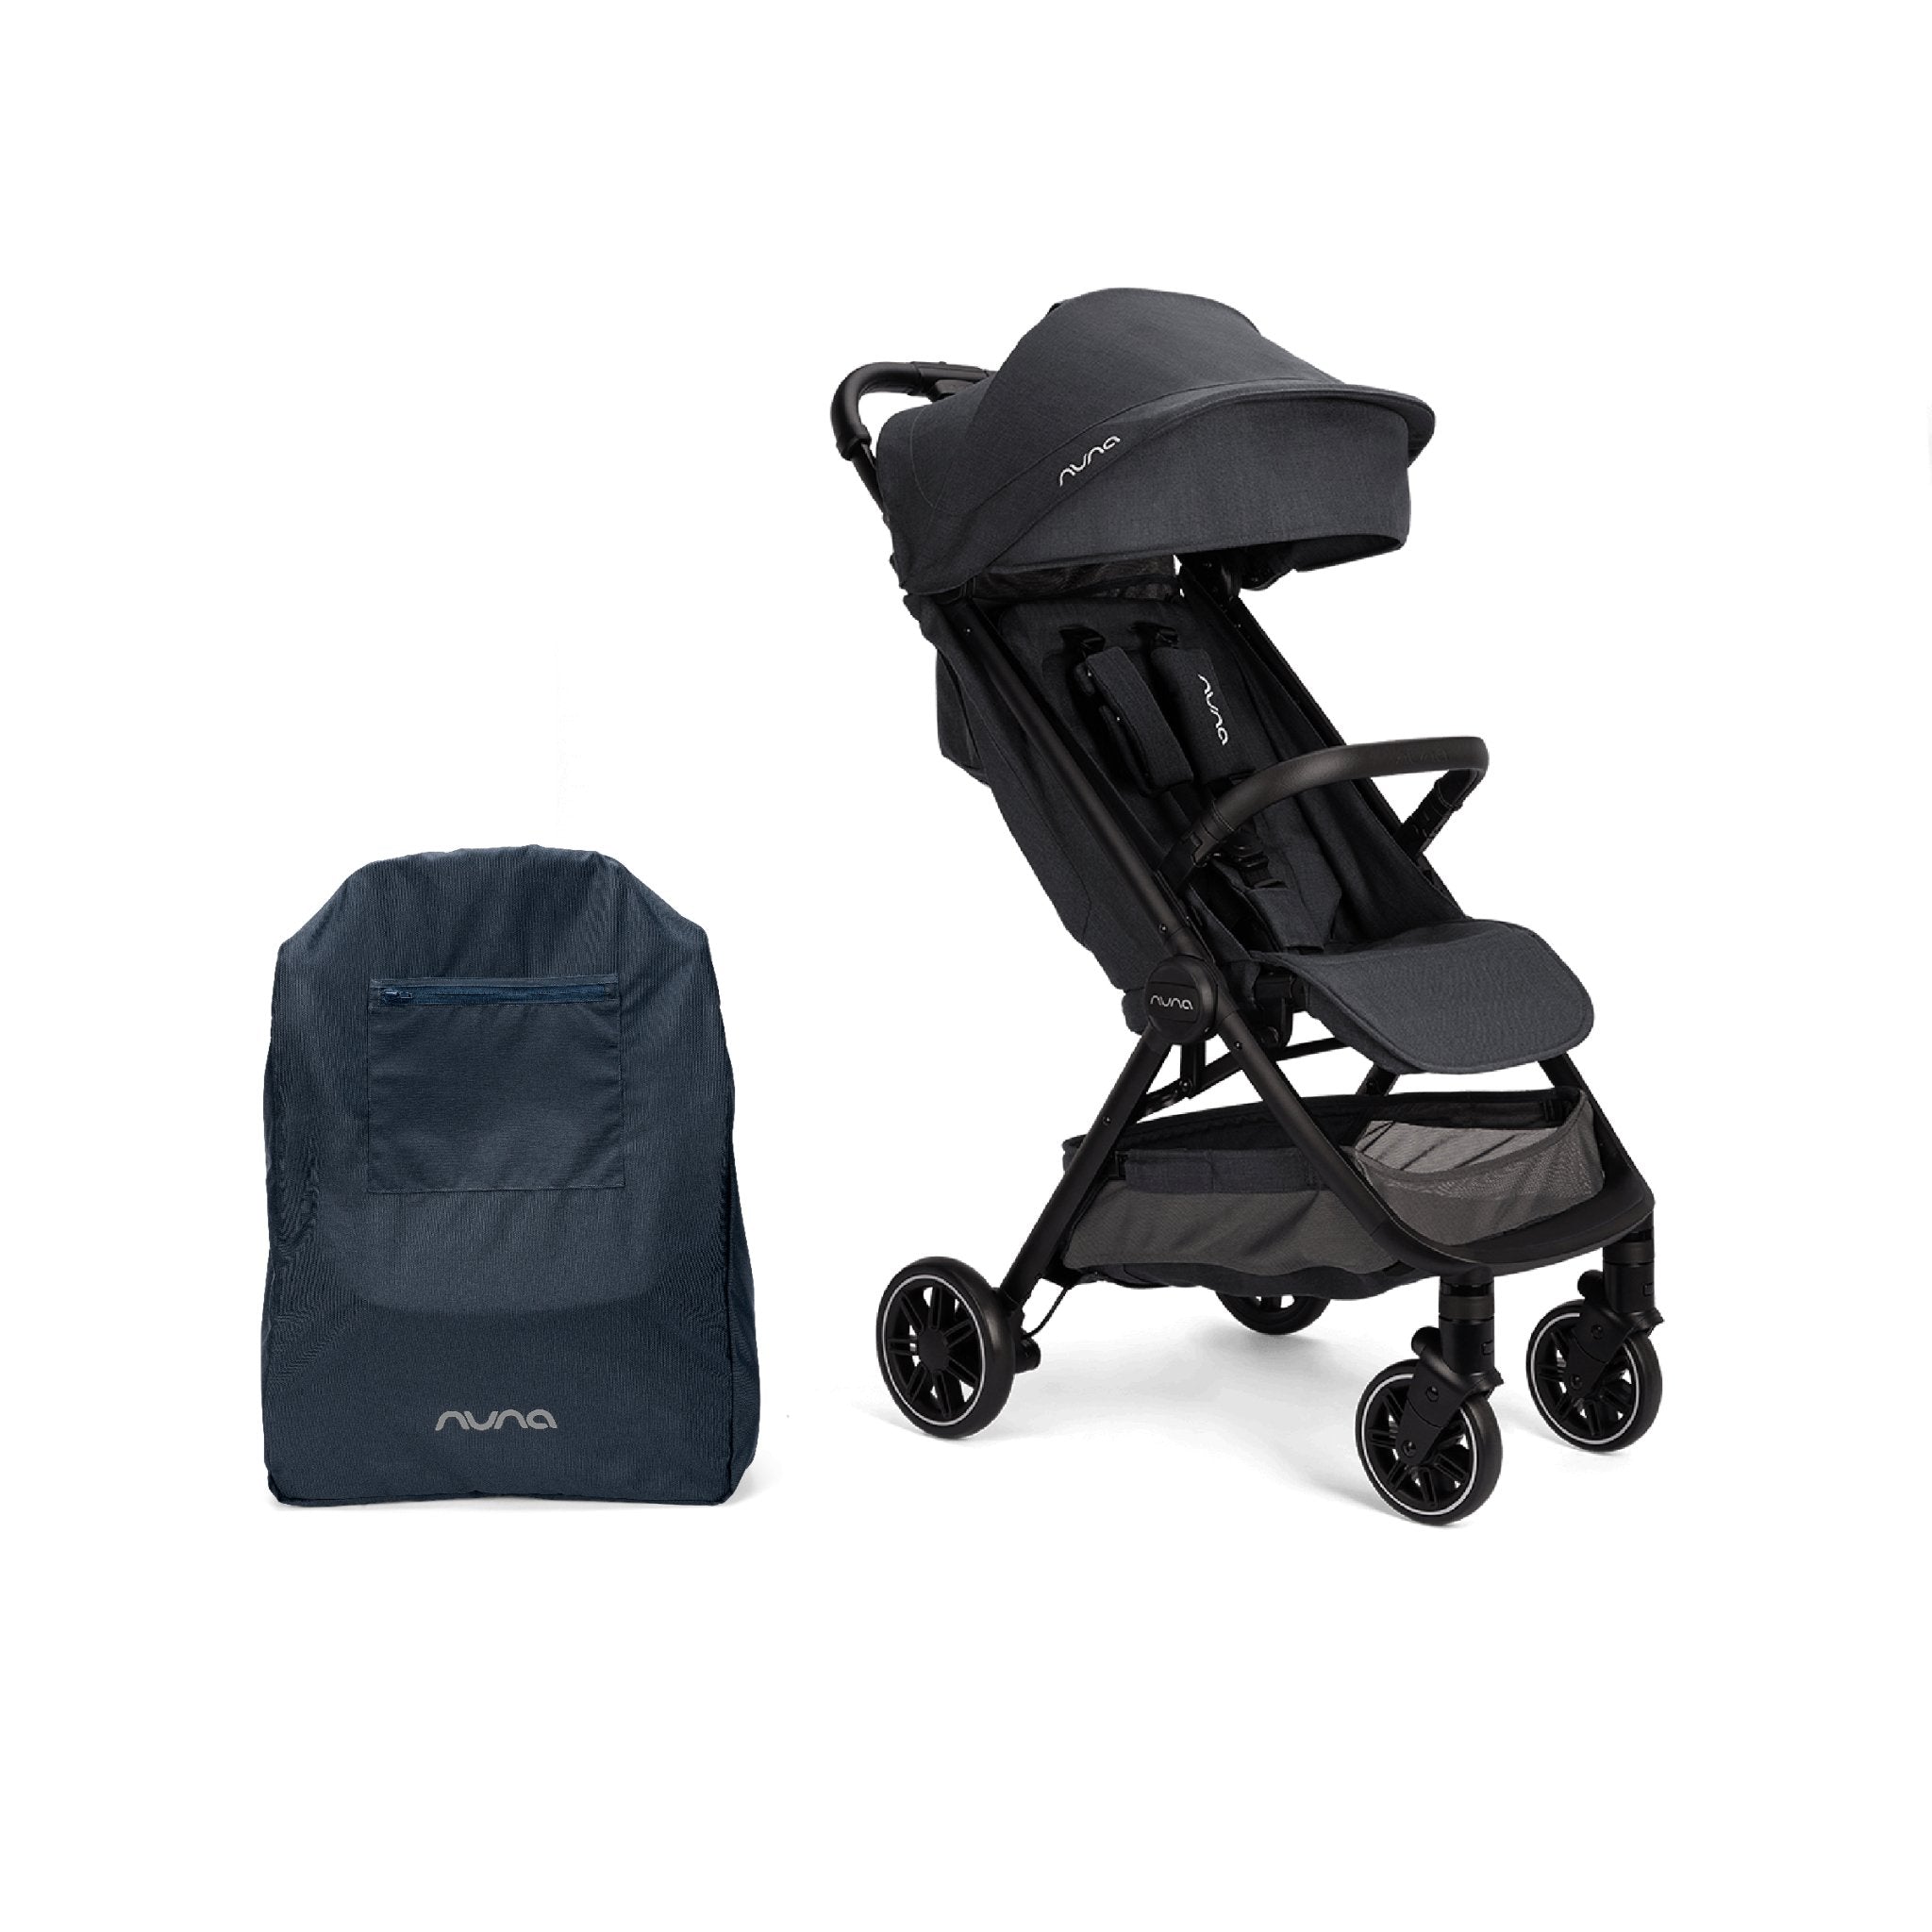 Nuna TRVL Stroller with Travel Bag - ANB Baby -8720246549140$300 - $500